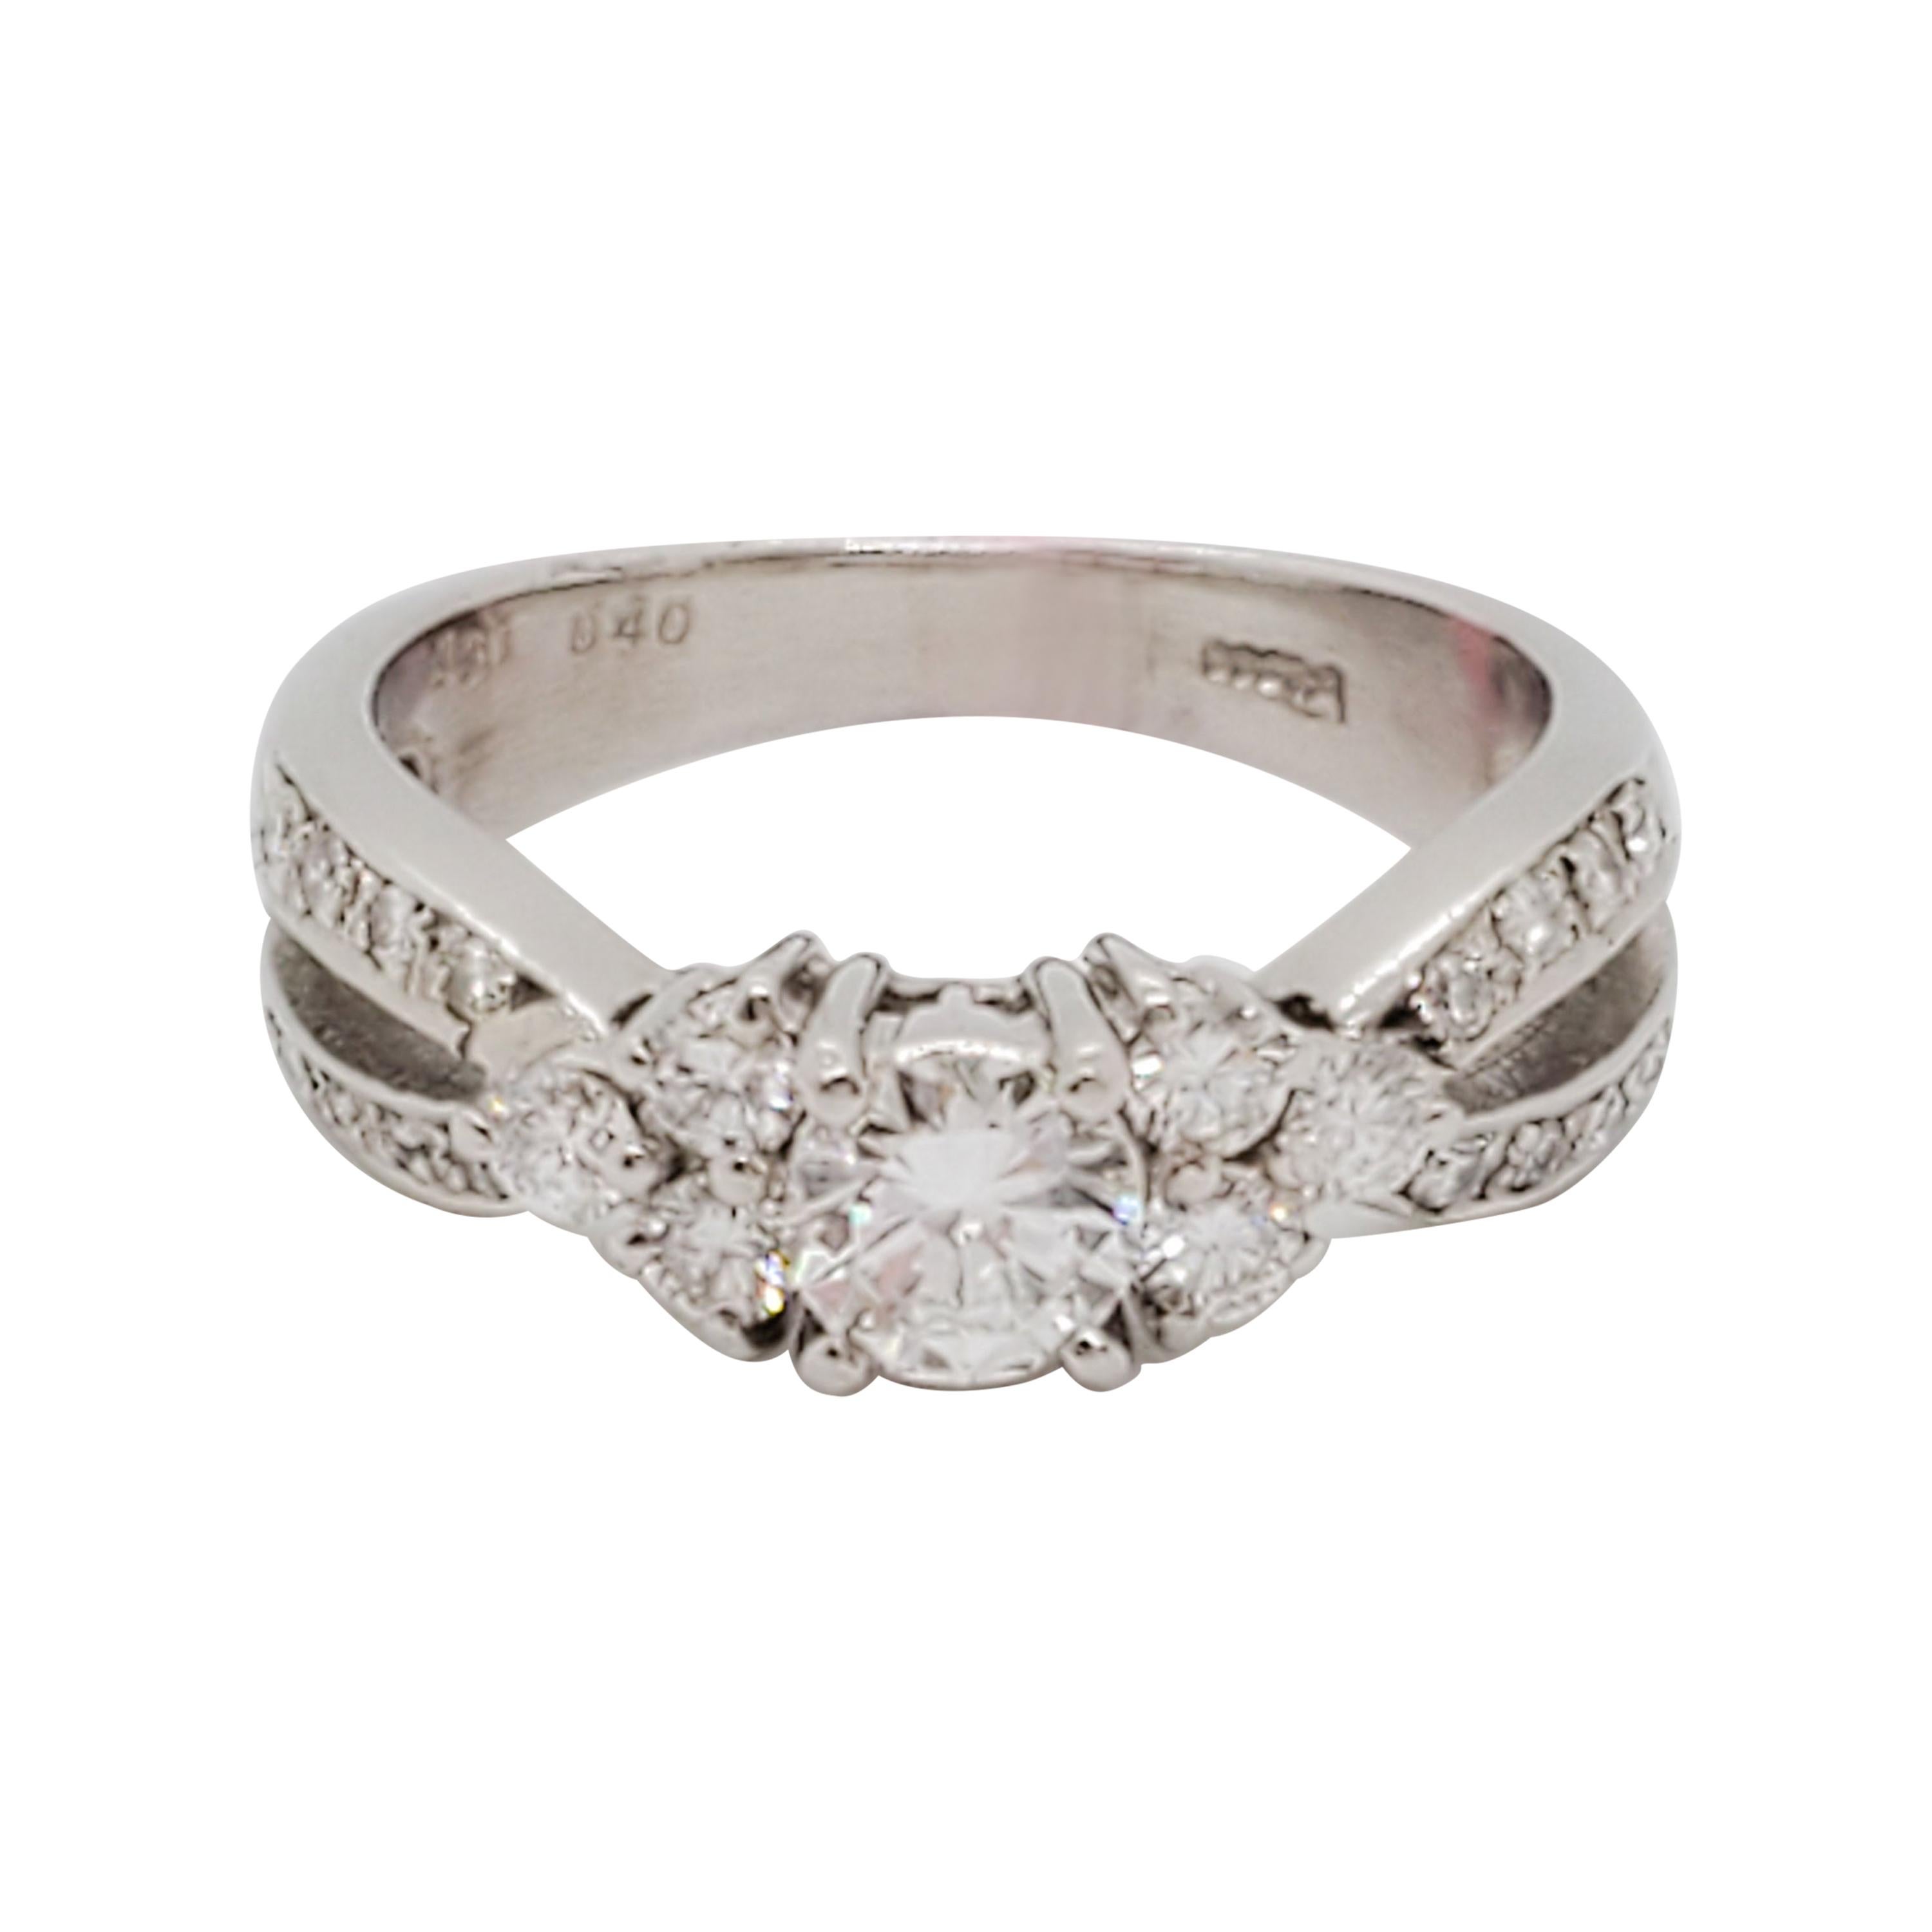  White Diamond Engagement Ring in Platinum